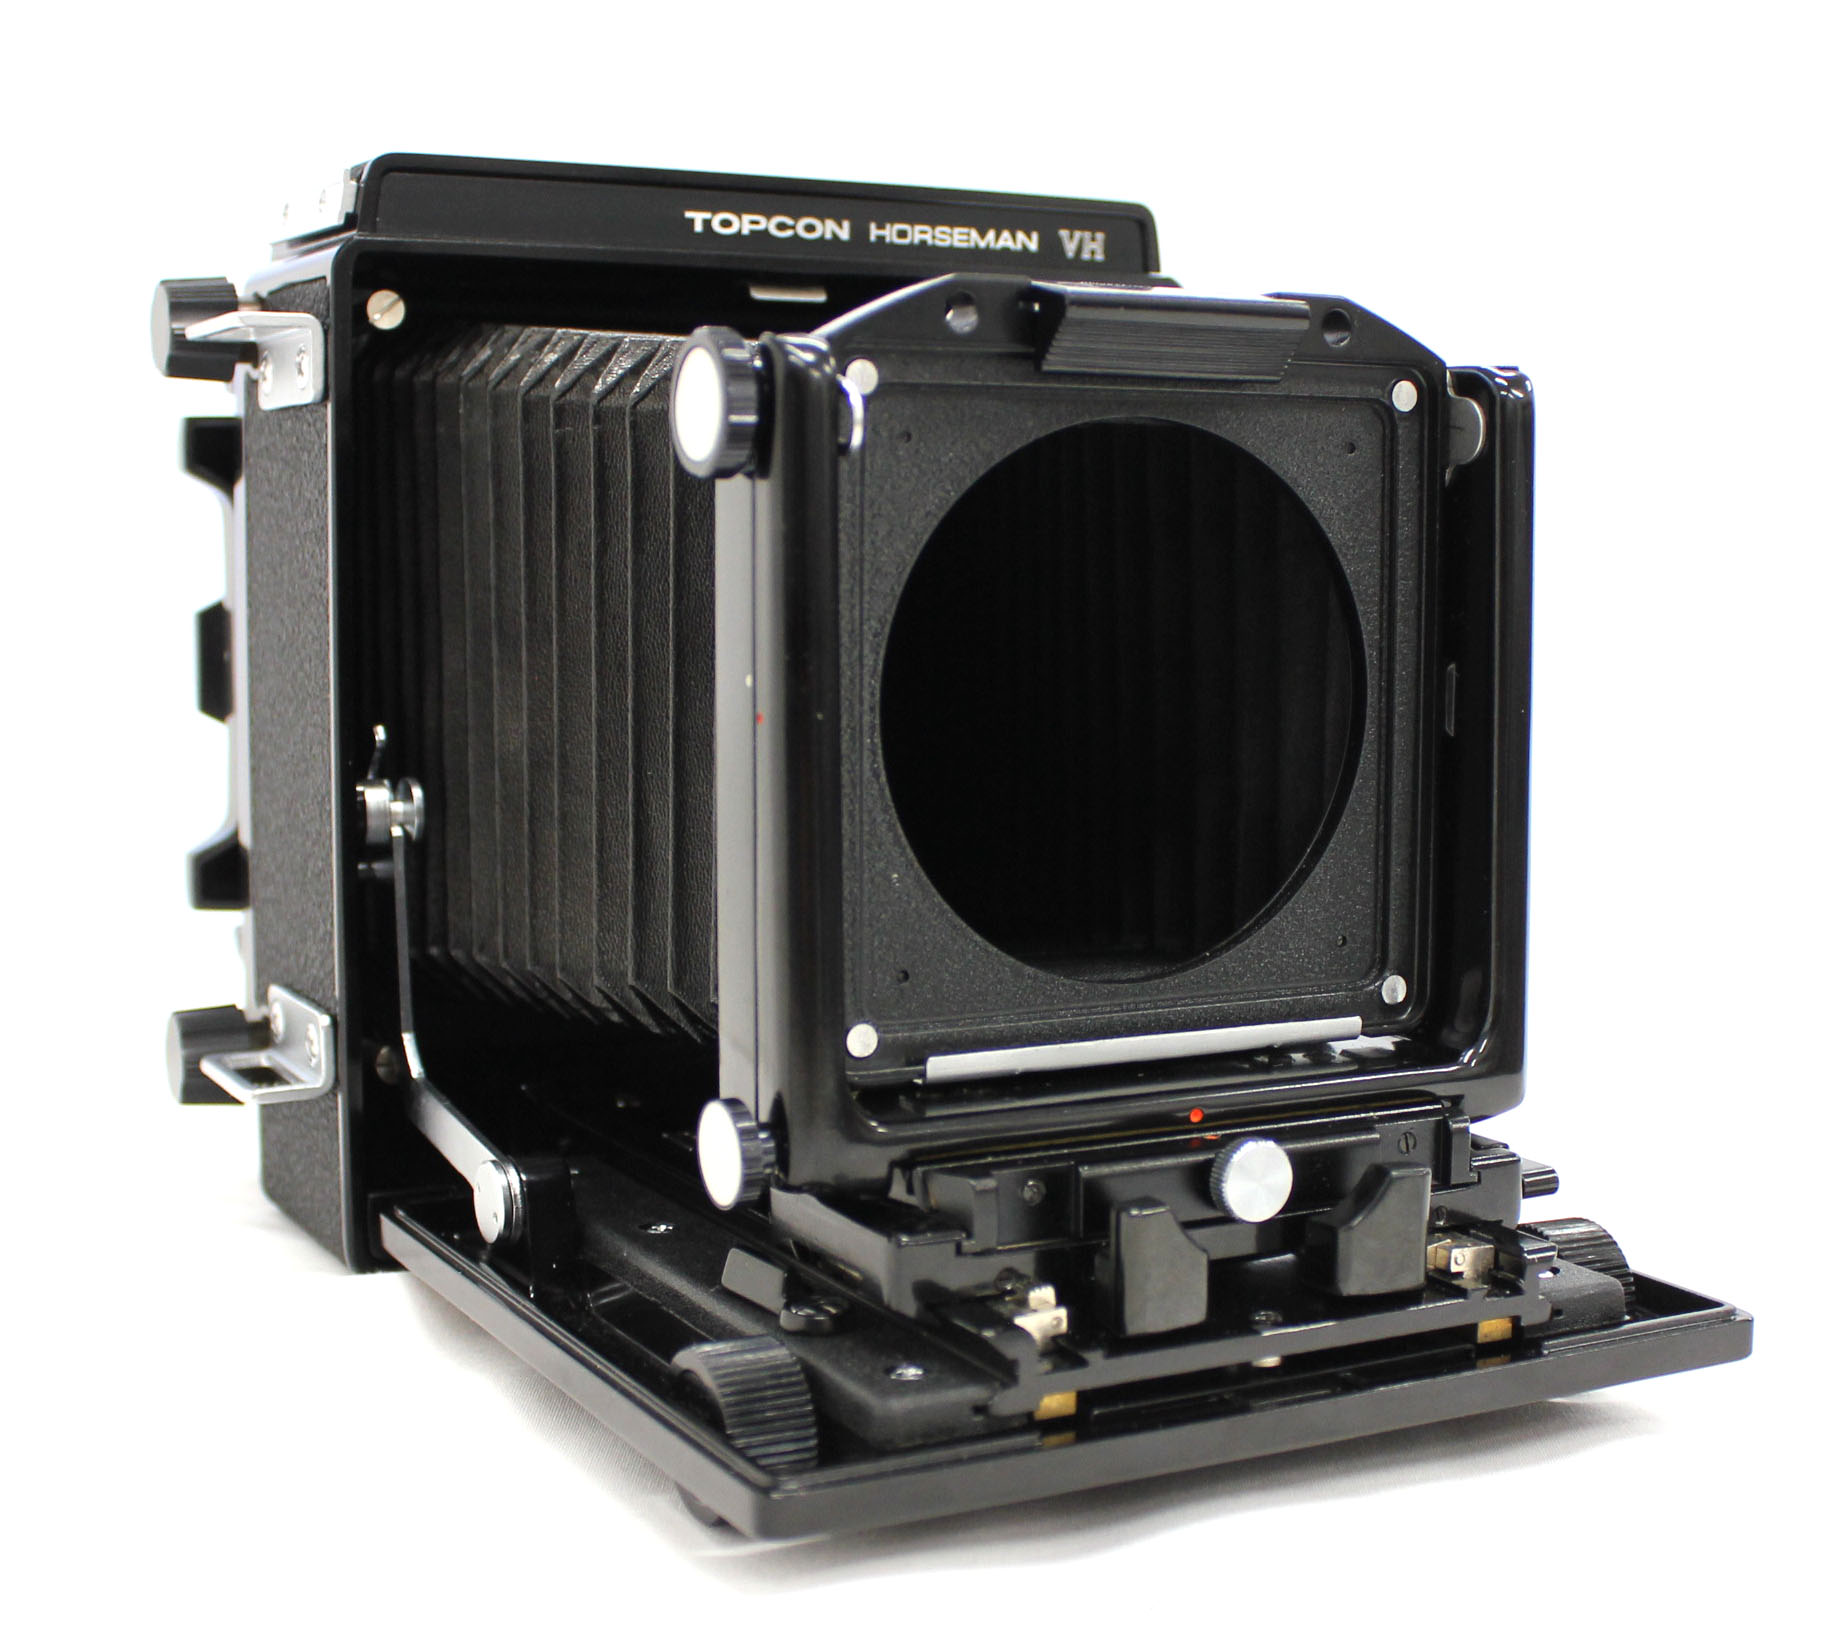 Topcon Horseman VH Large Format Film Camera with Professional Topcor 105mm  F/3.5 Lens and Magnifier from Japan (C1943) | Big Fish J-Camera (Big Fish  